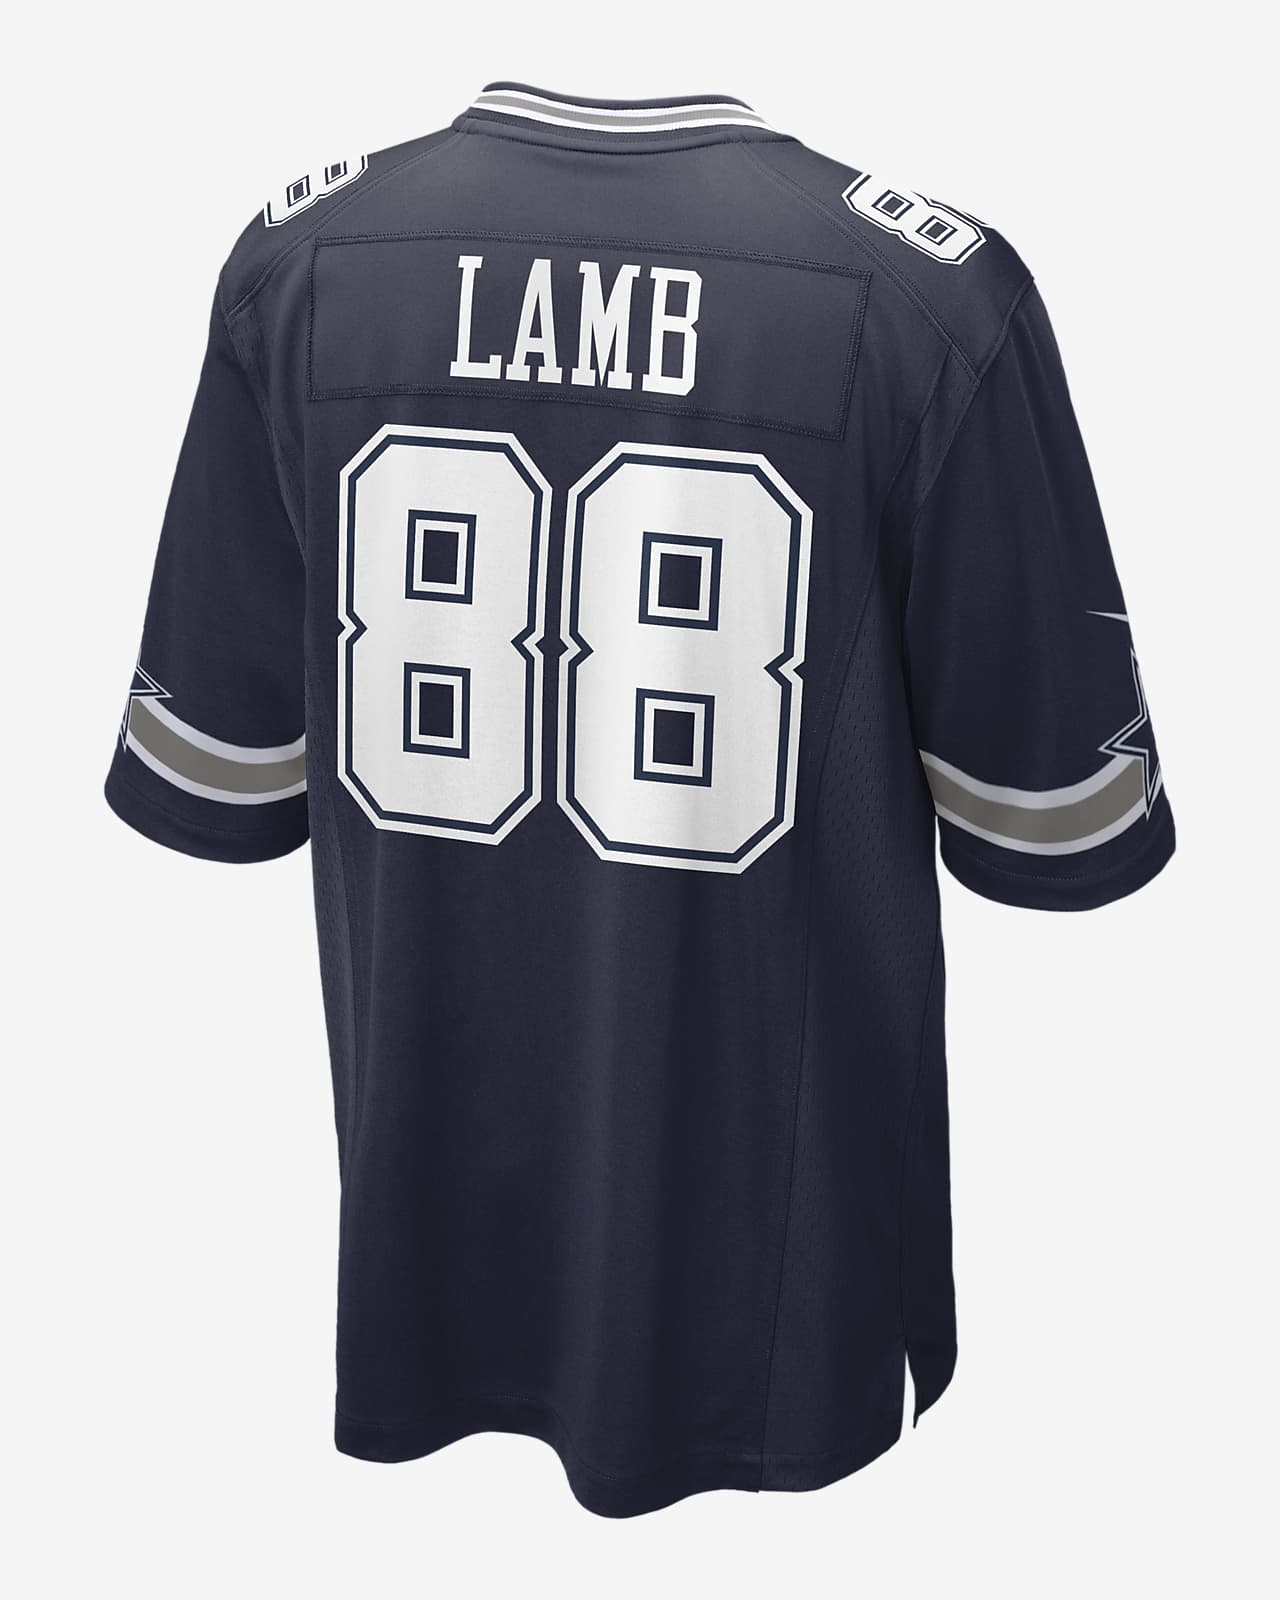 NFL Dallas Cowboys (CeeDee Lamb) Men's Game Football Jersey